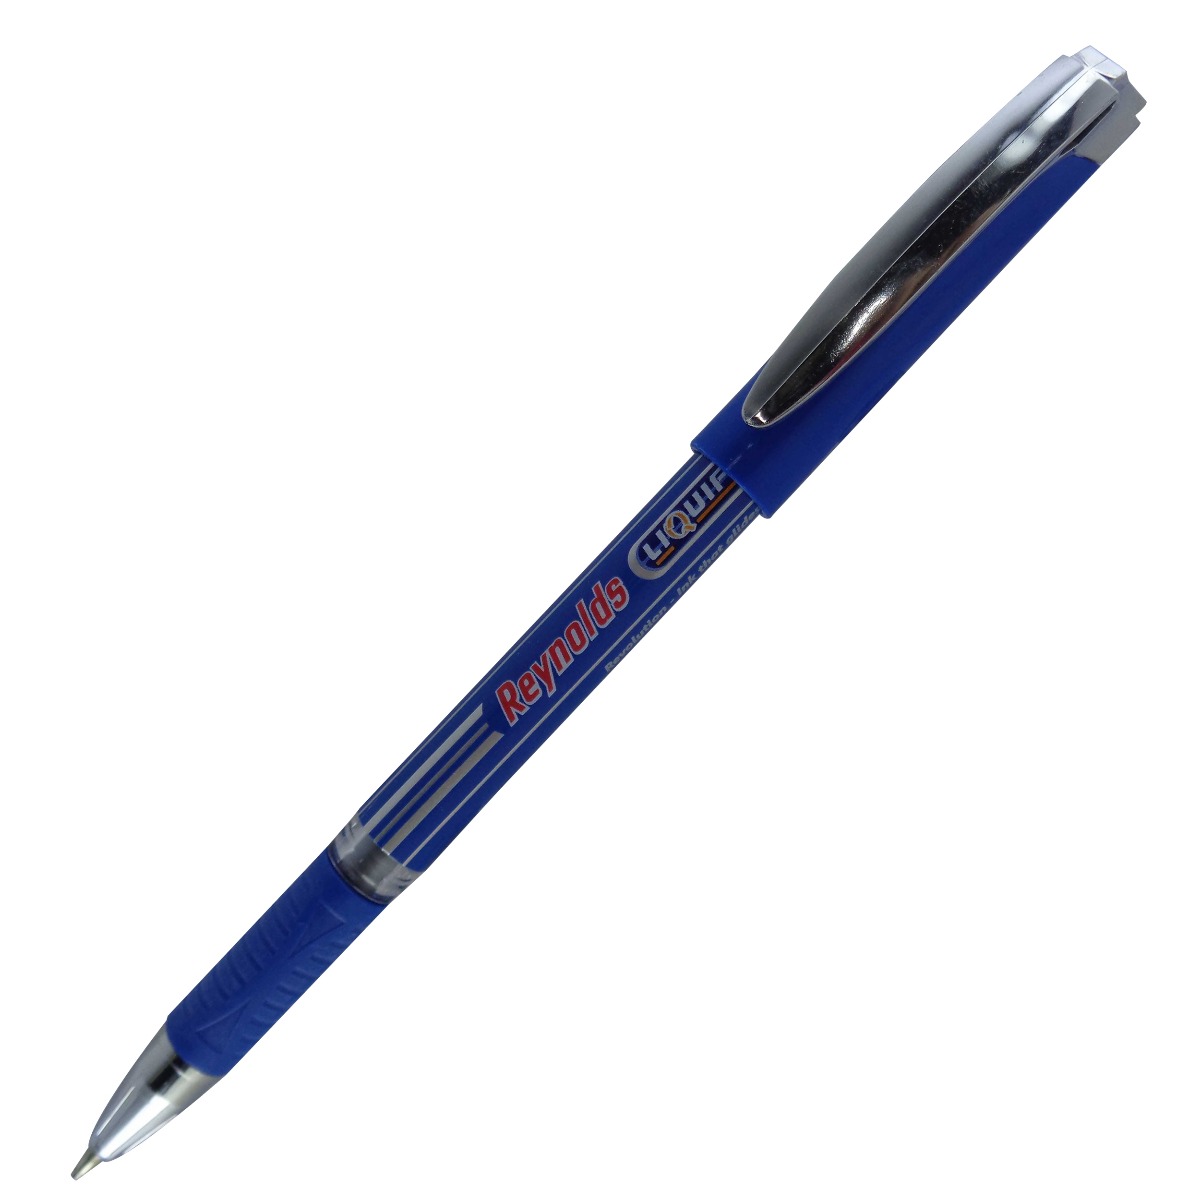 Reynolds Model: 15036 liquiflo Blue color body with medium tip blue ink cap type ball pen